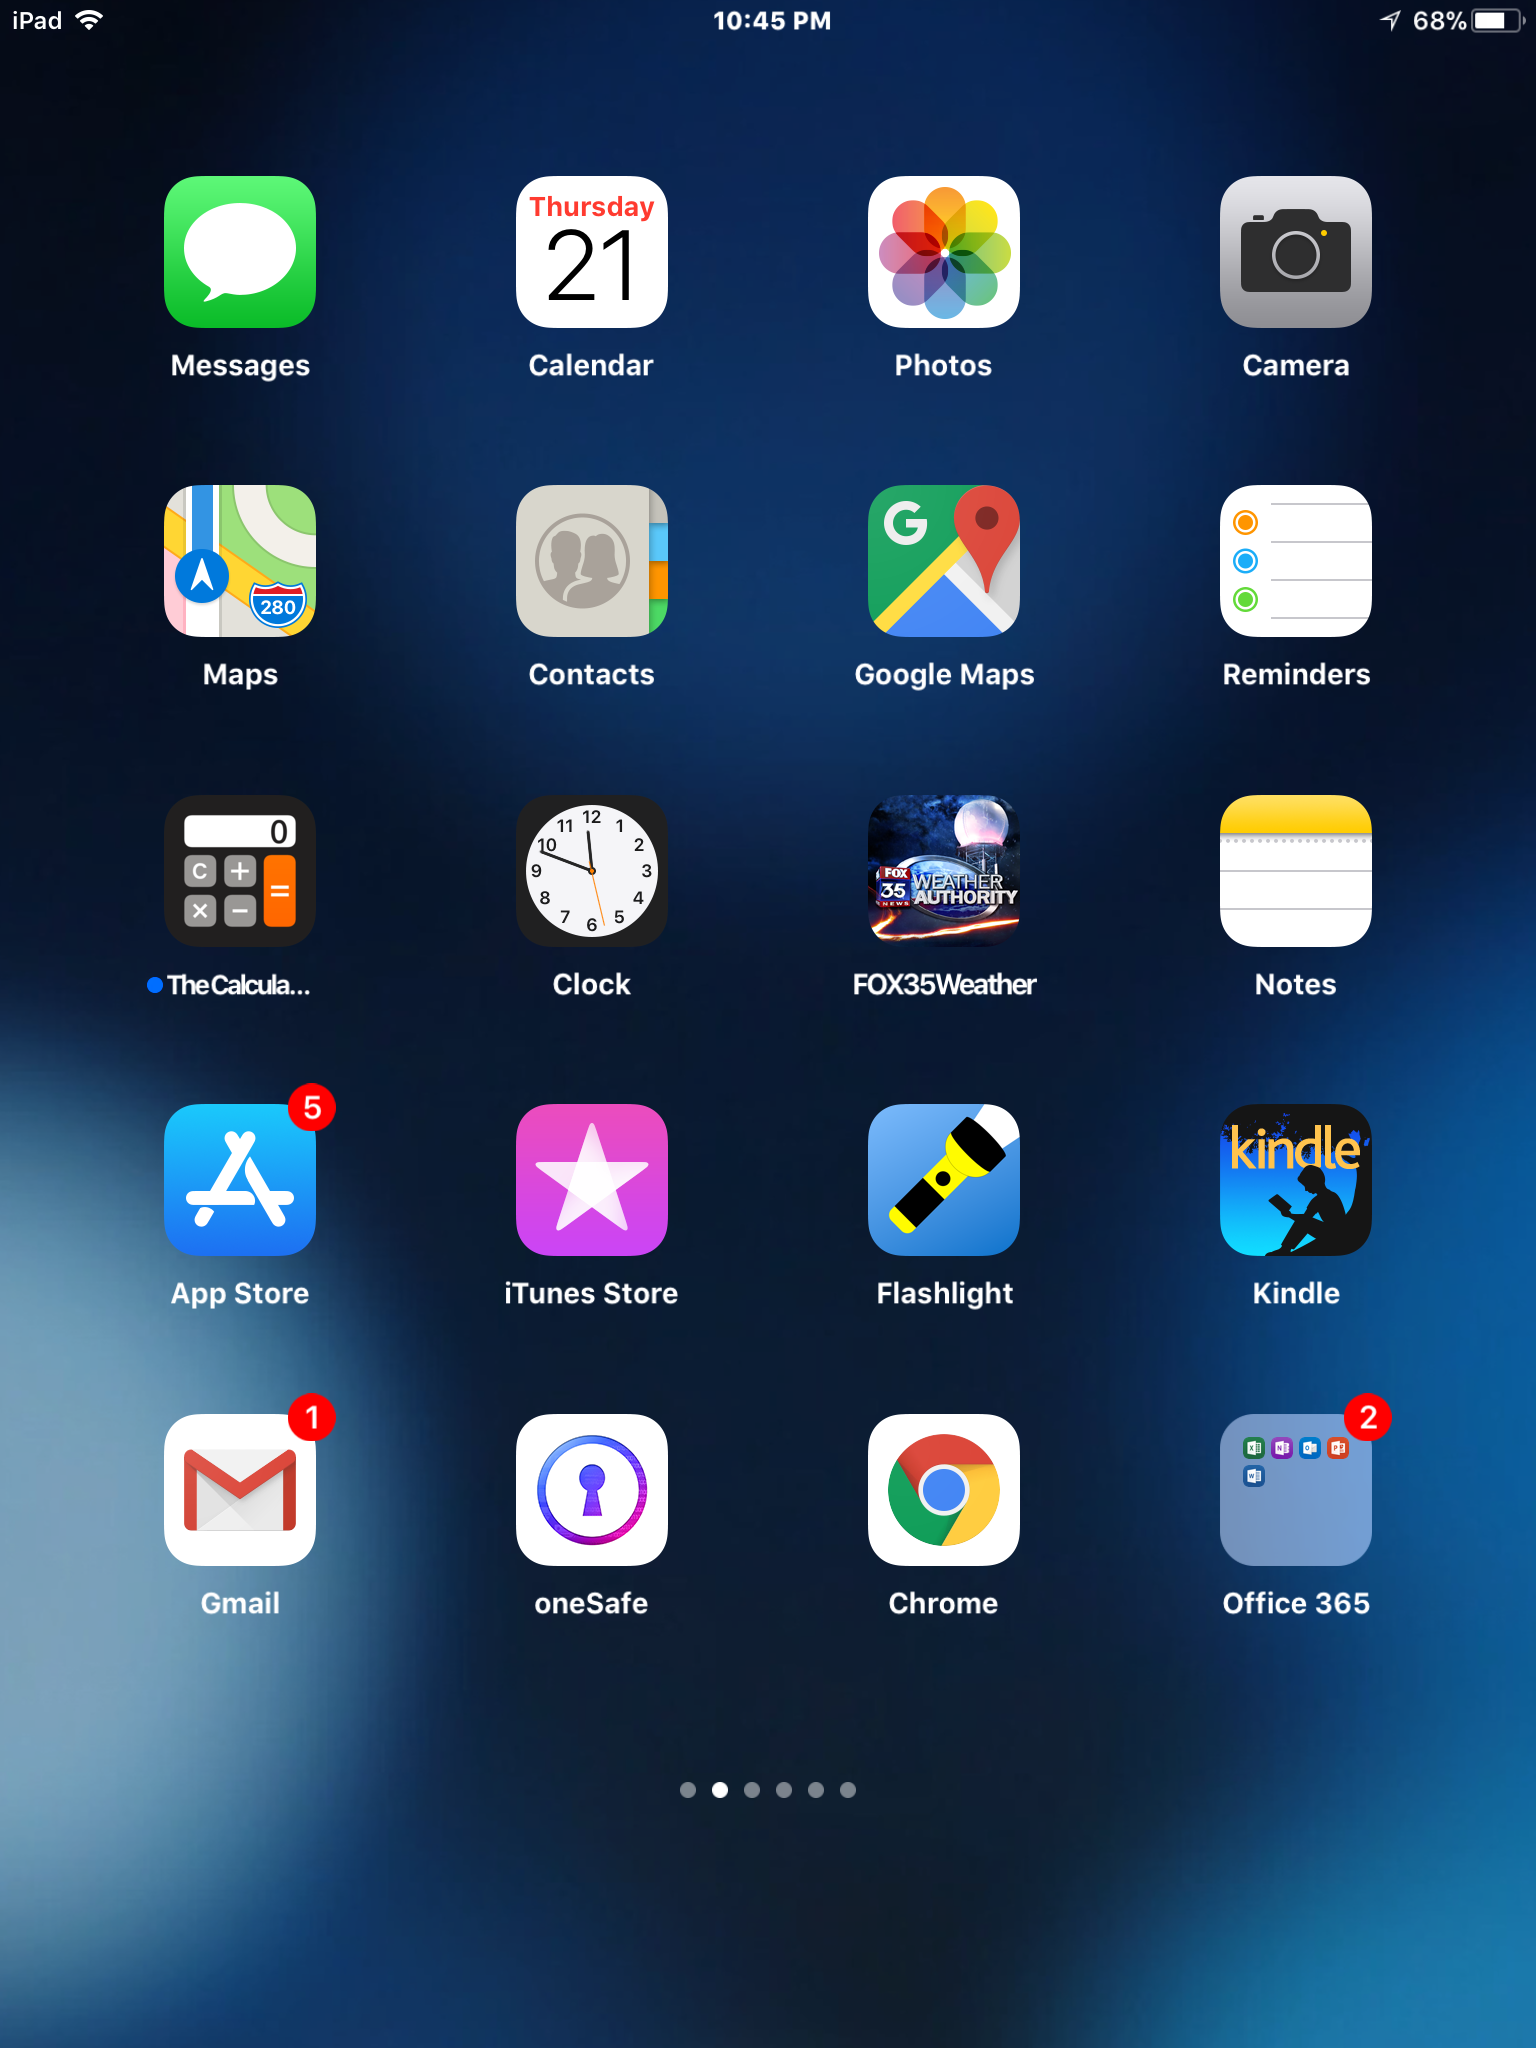 iPad dock hidden on home screen iOS 11 Apple Community